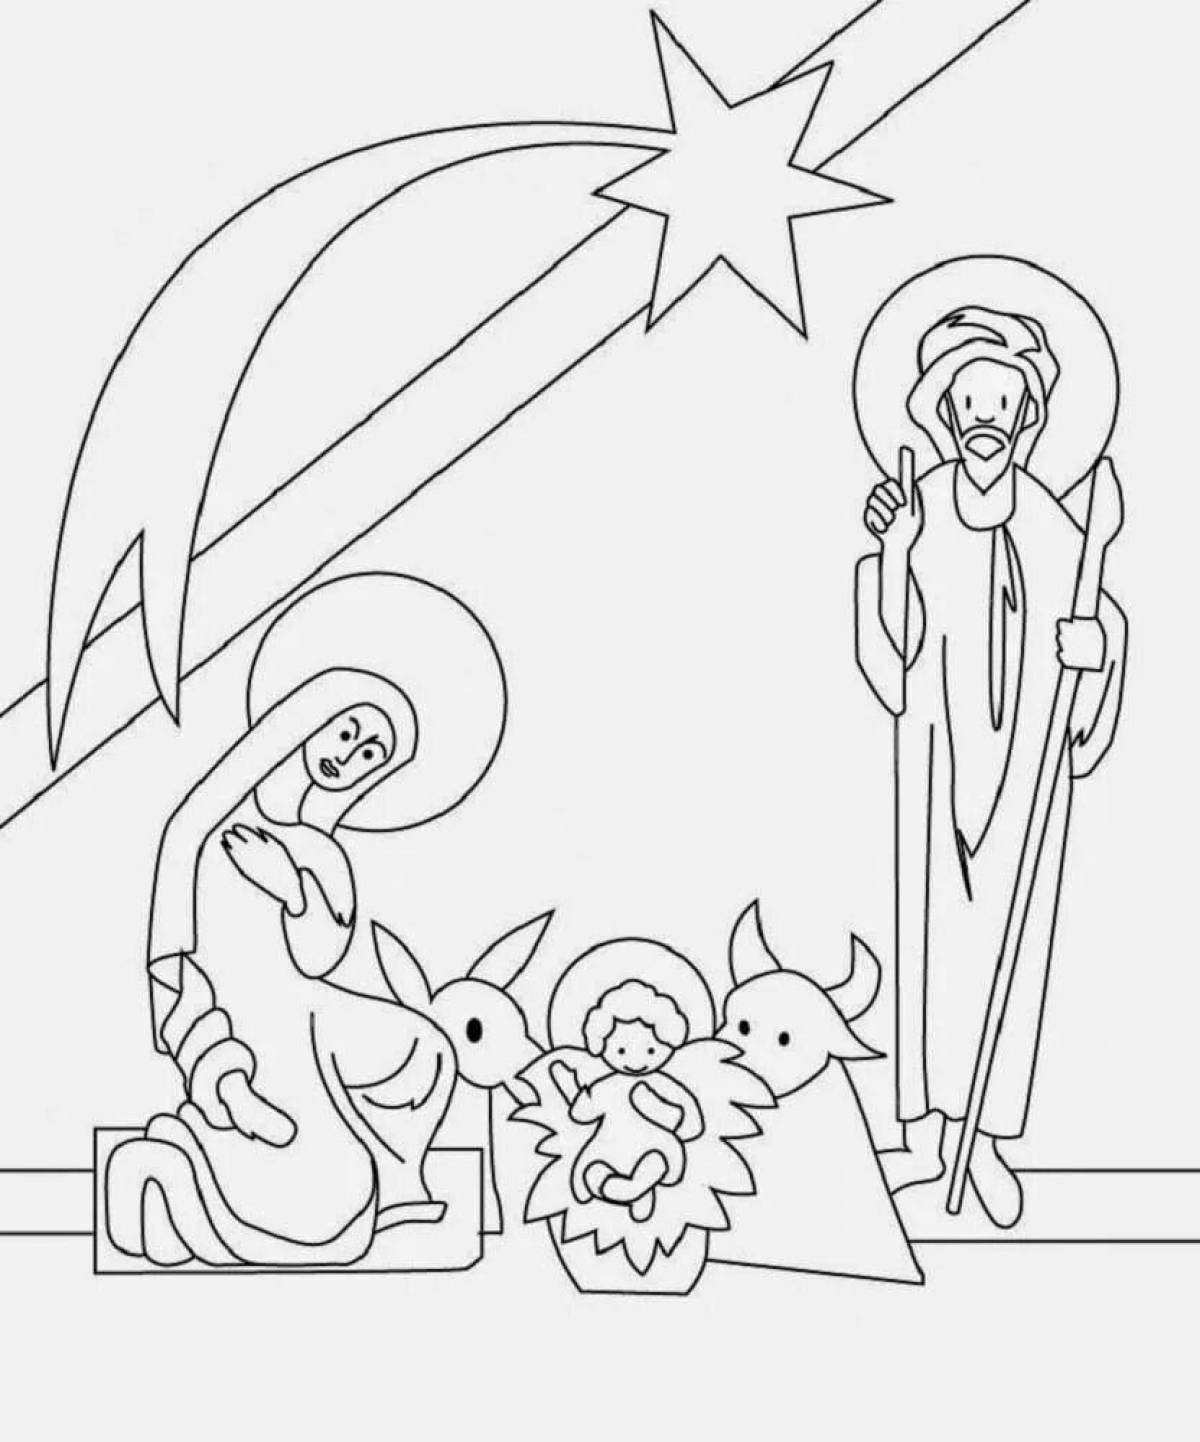 Coloring page joyful nativity scene